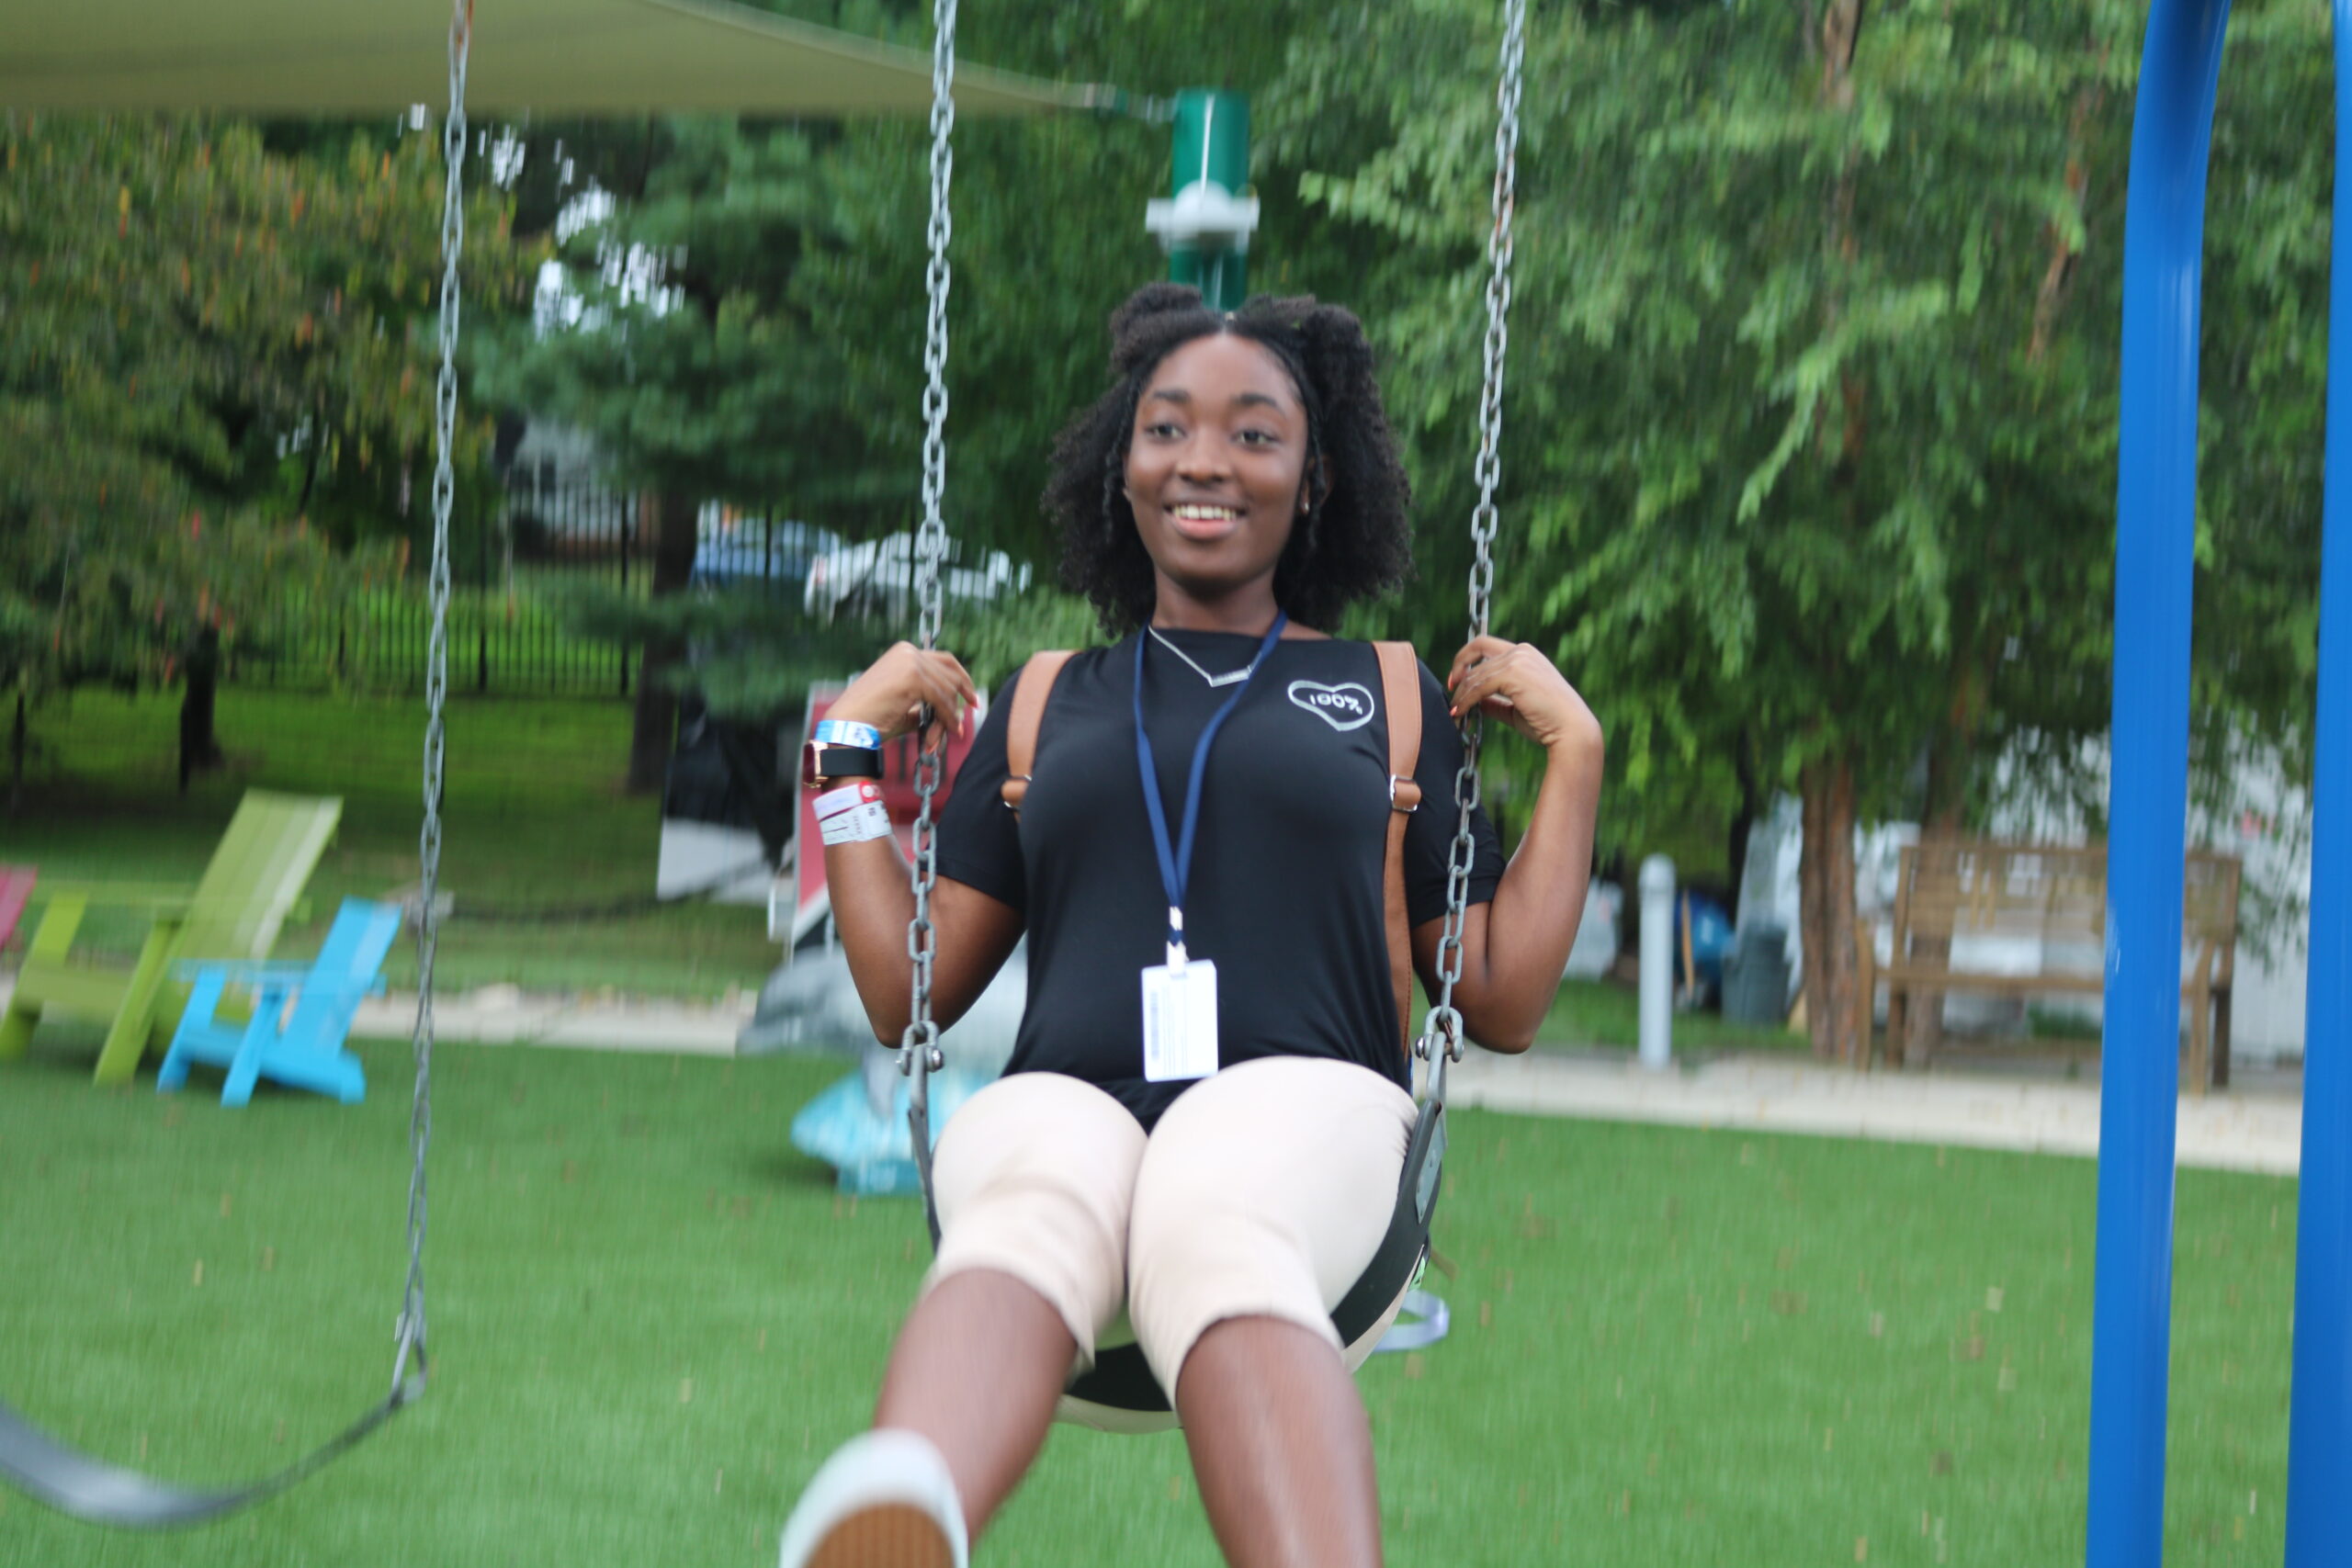 Faithanne swinging in a park